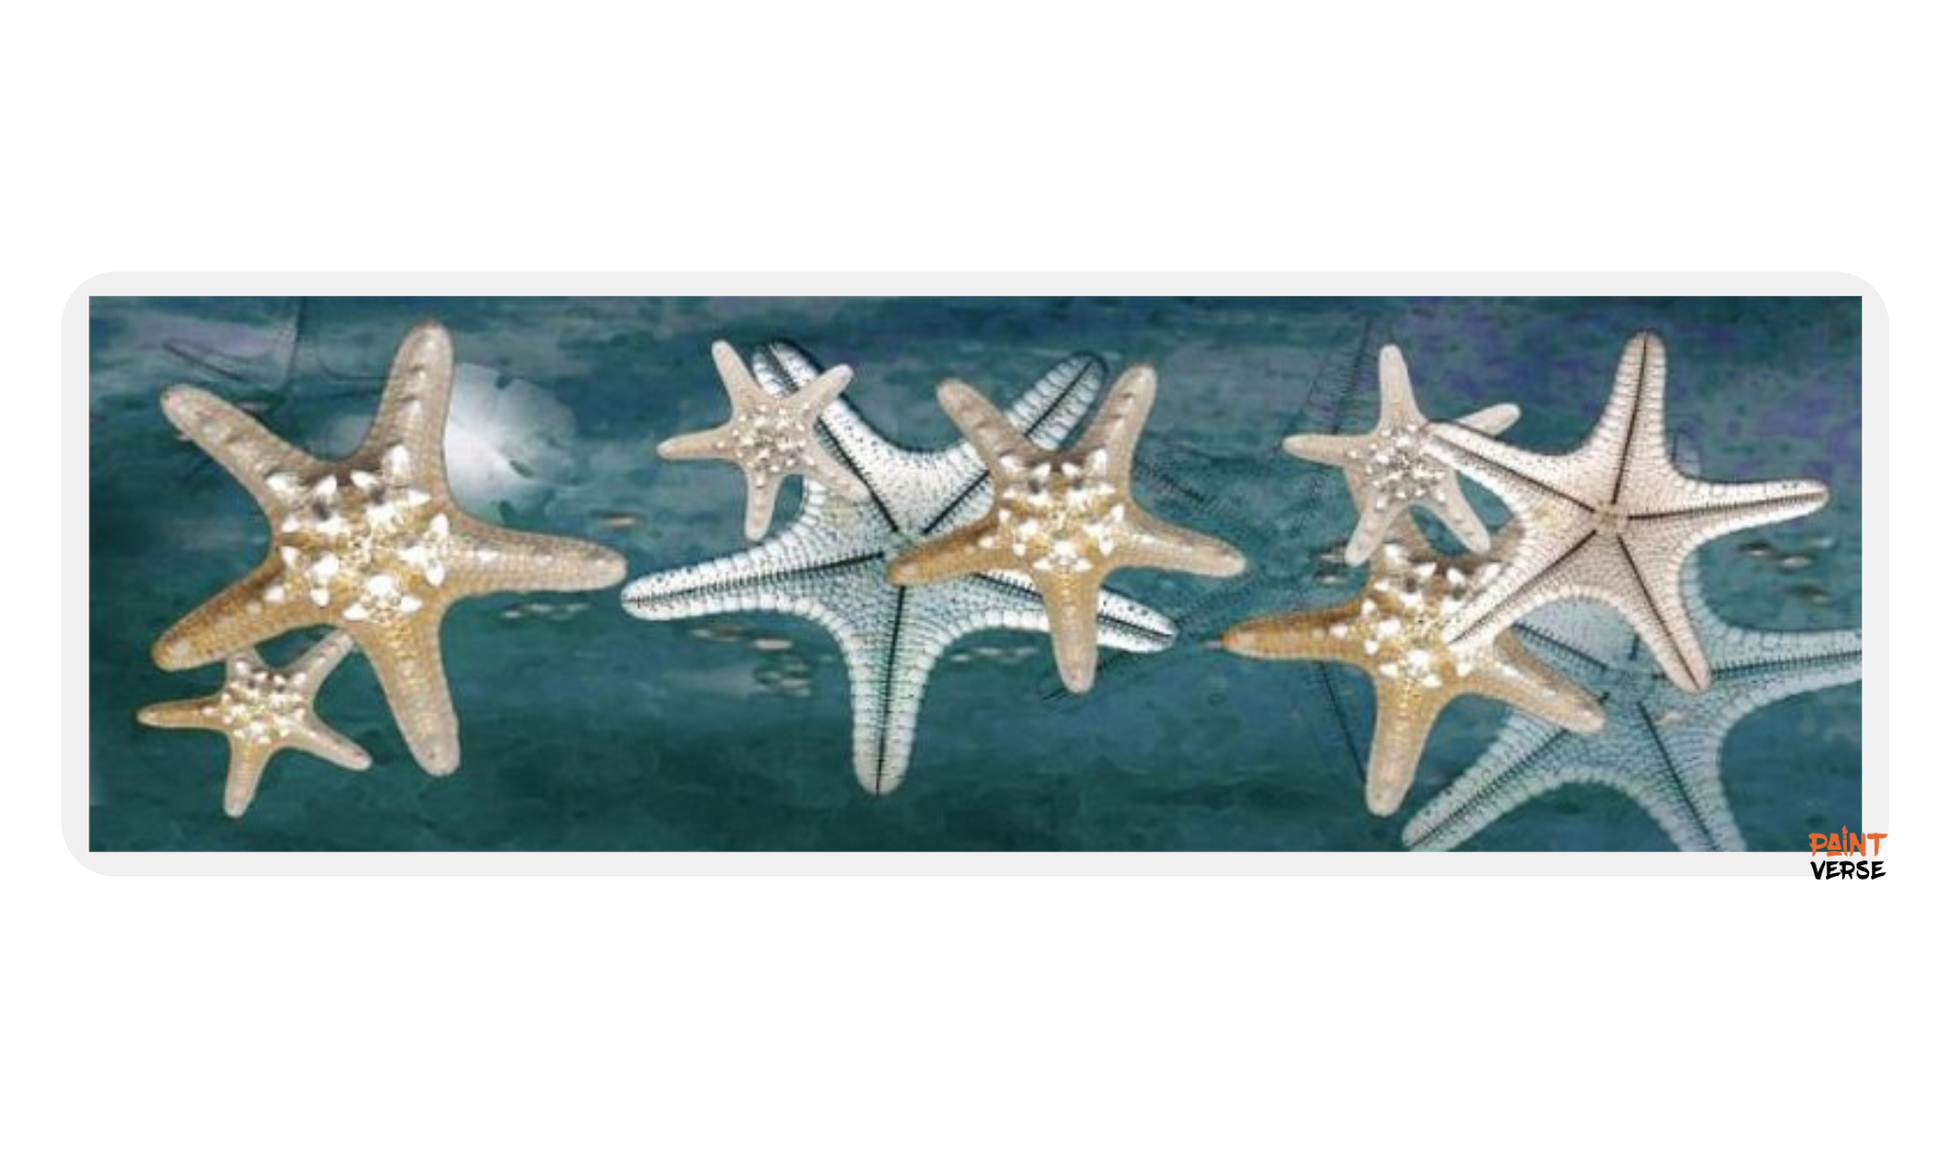 Print Canvas Art Abstract Still Life Starfish on Lake Seascape Oil Painting